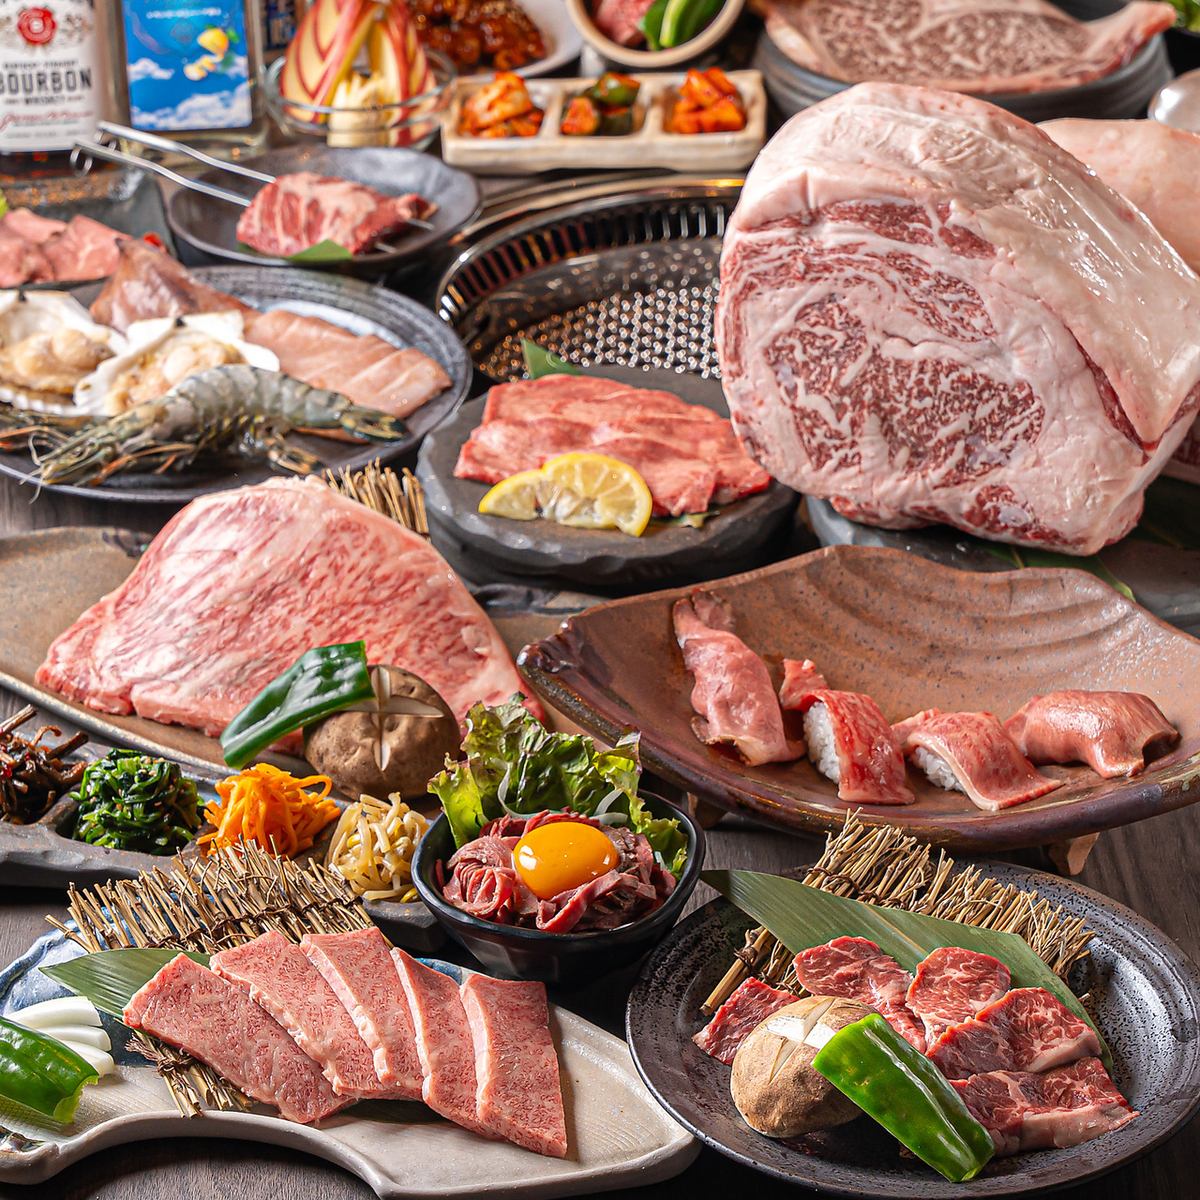 Aji Matsuri Kingdom, where you can enjoy high-quality yakiniku, meat sushi, and Korean cuisine, is now open!